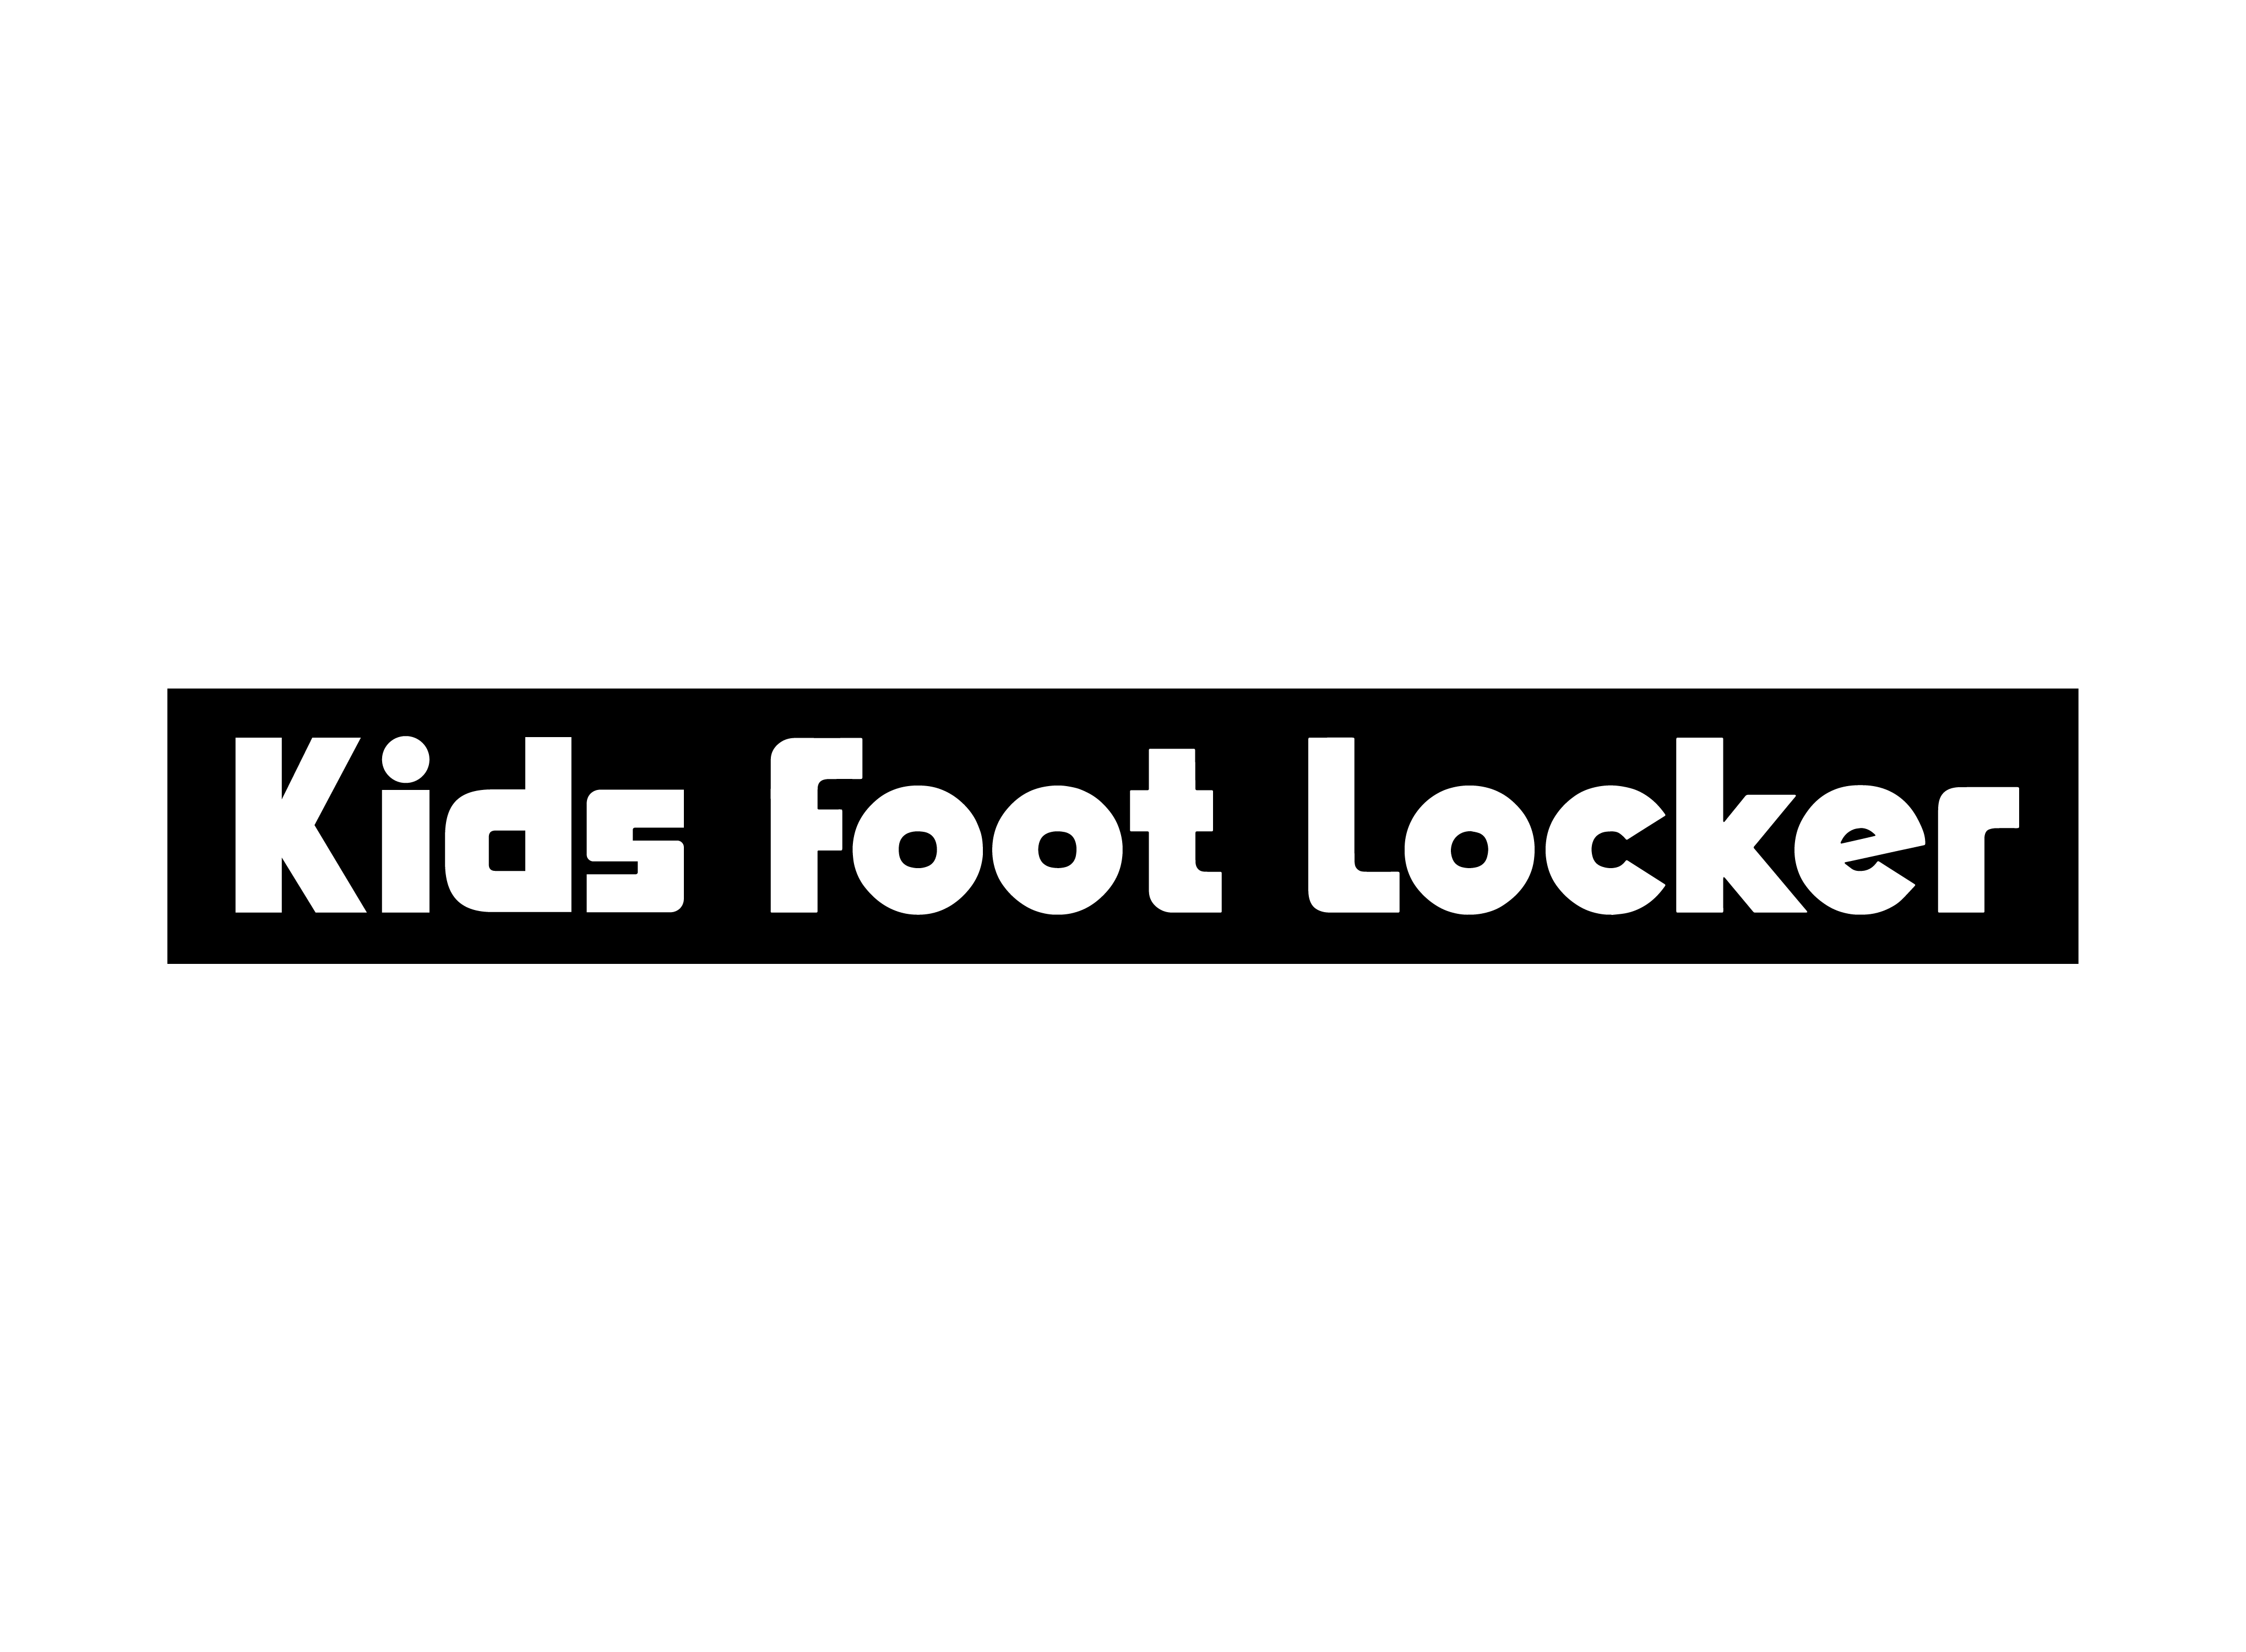 nmd kids foot locker